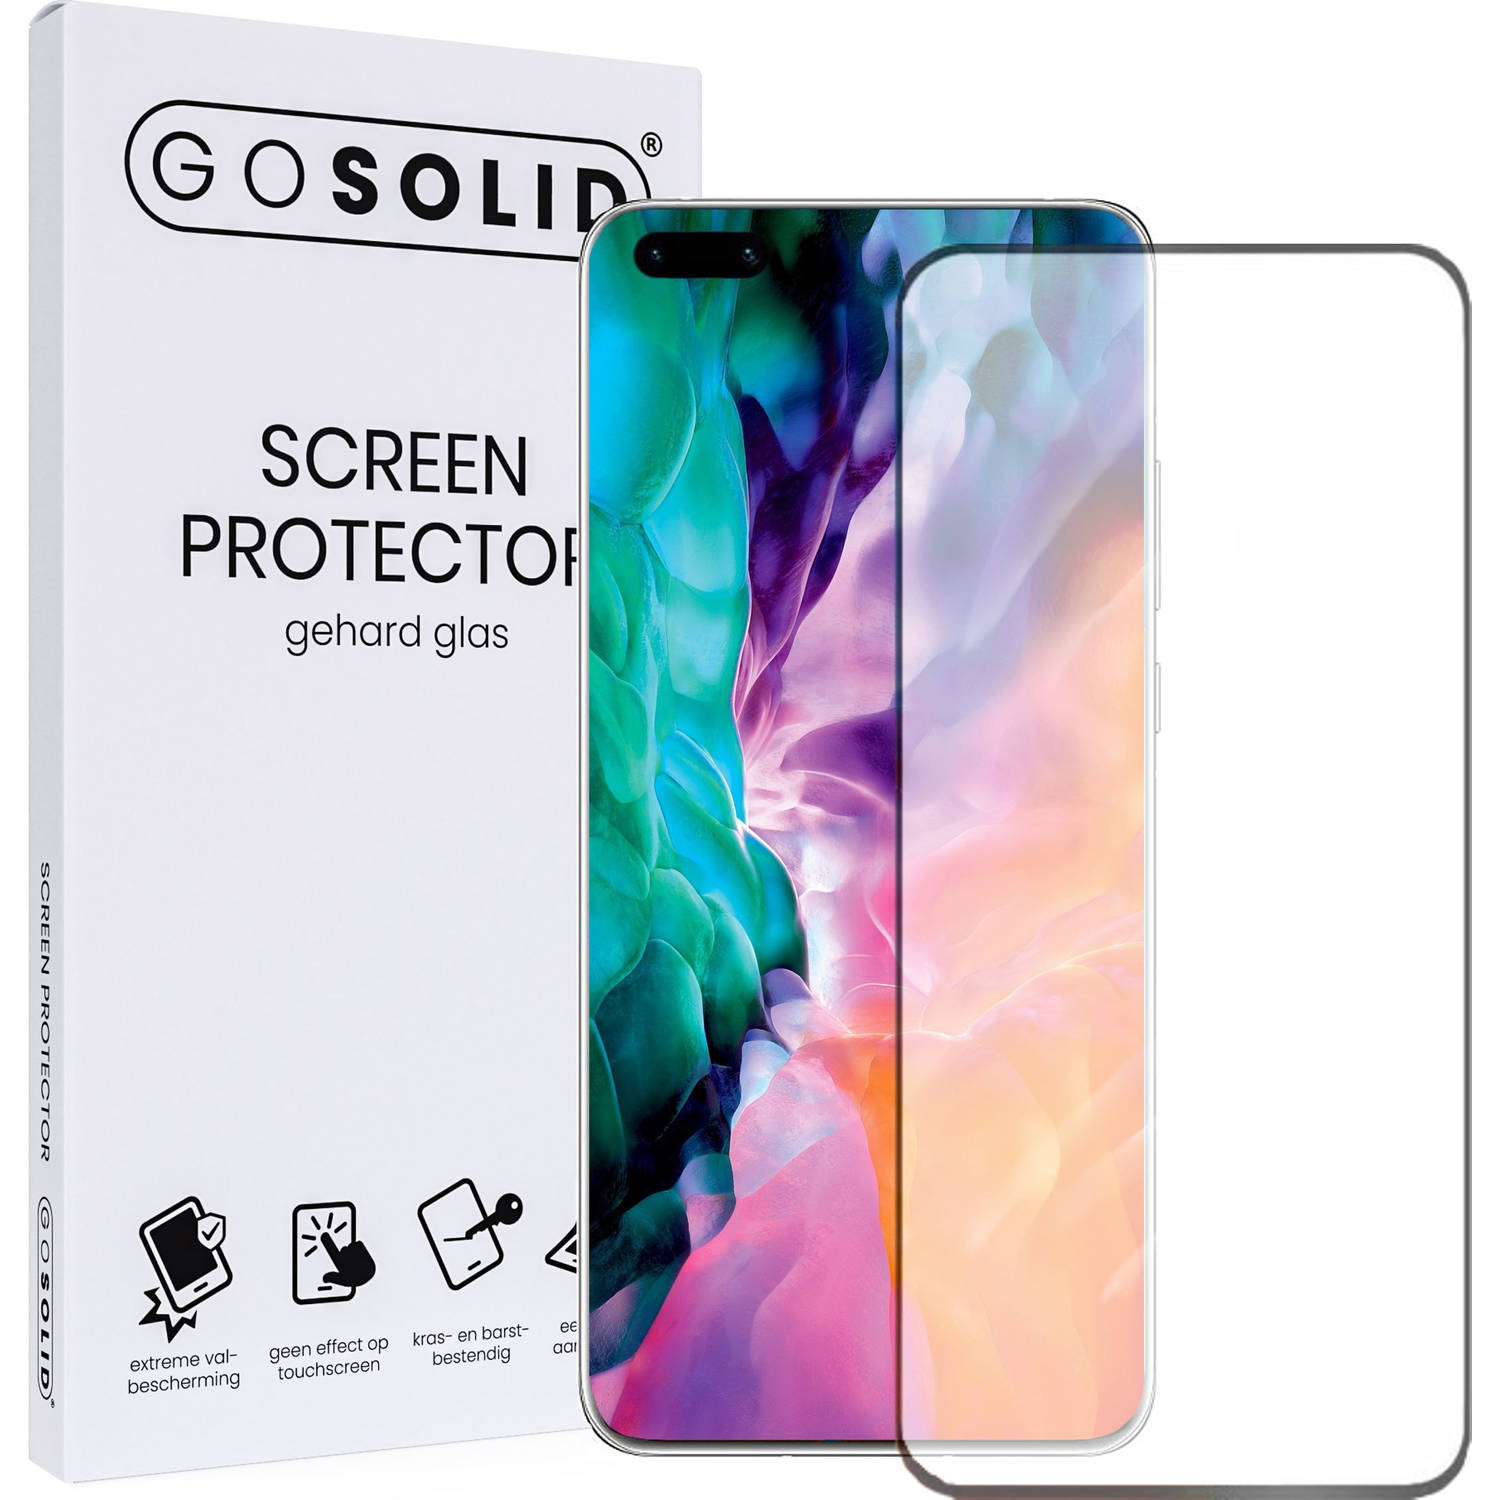 GO SOLID! ® Screenprotector OnePlus 8 - gehard glas